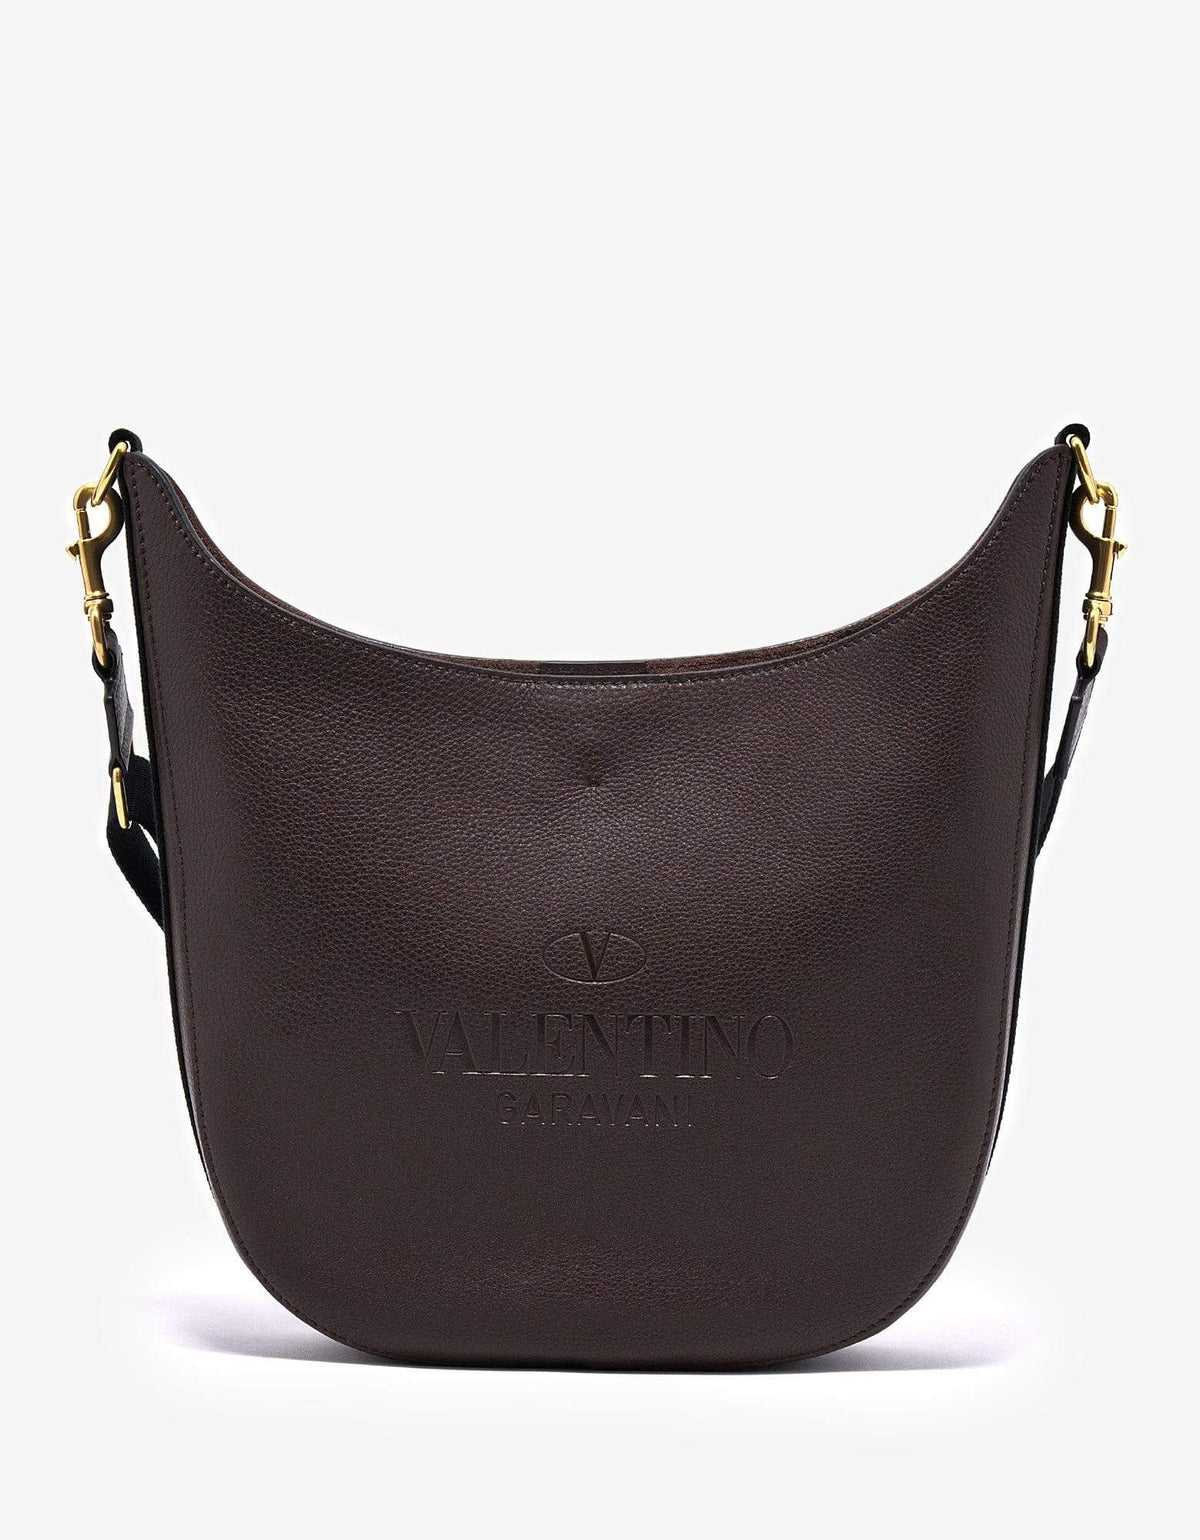 Valentino Garavani Brown Identity Leather Hobo Bag